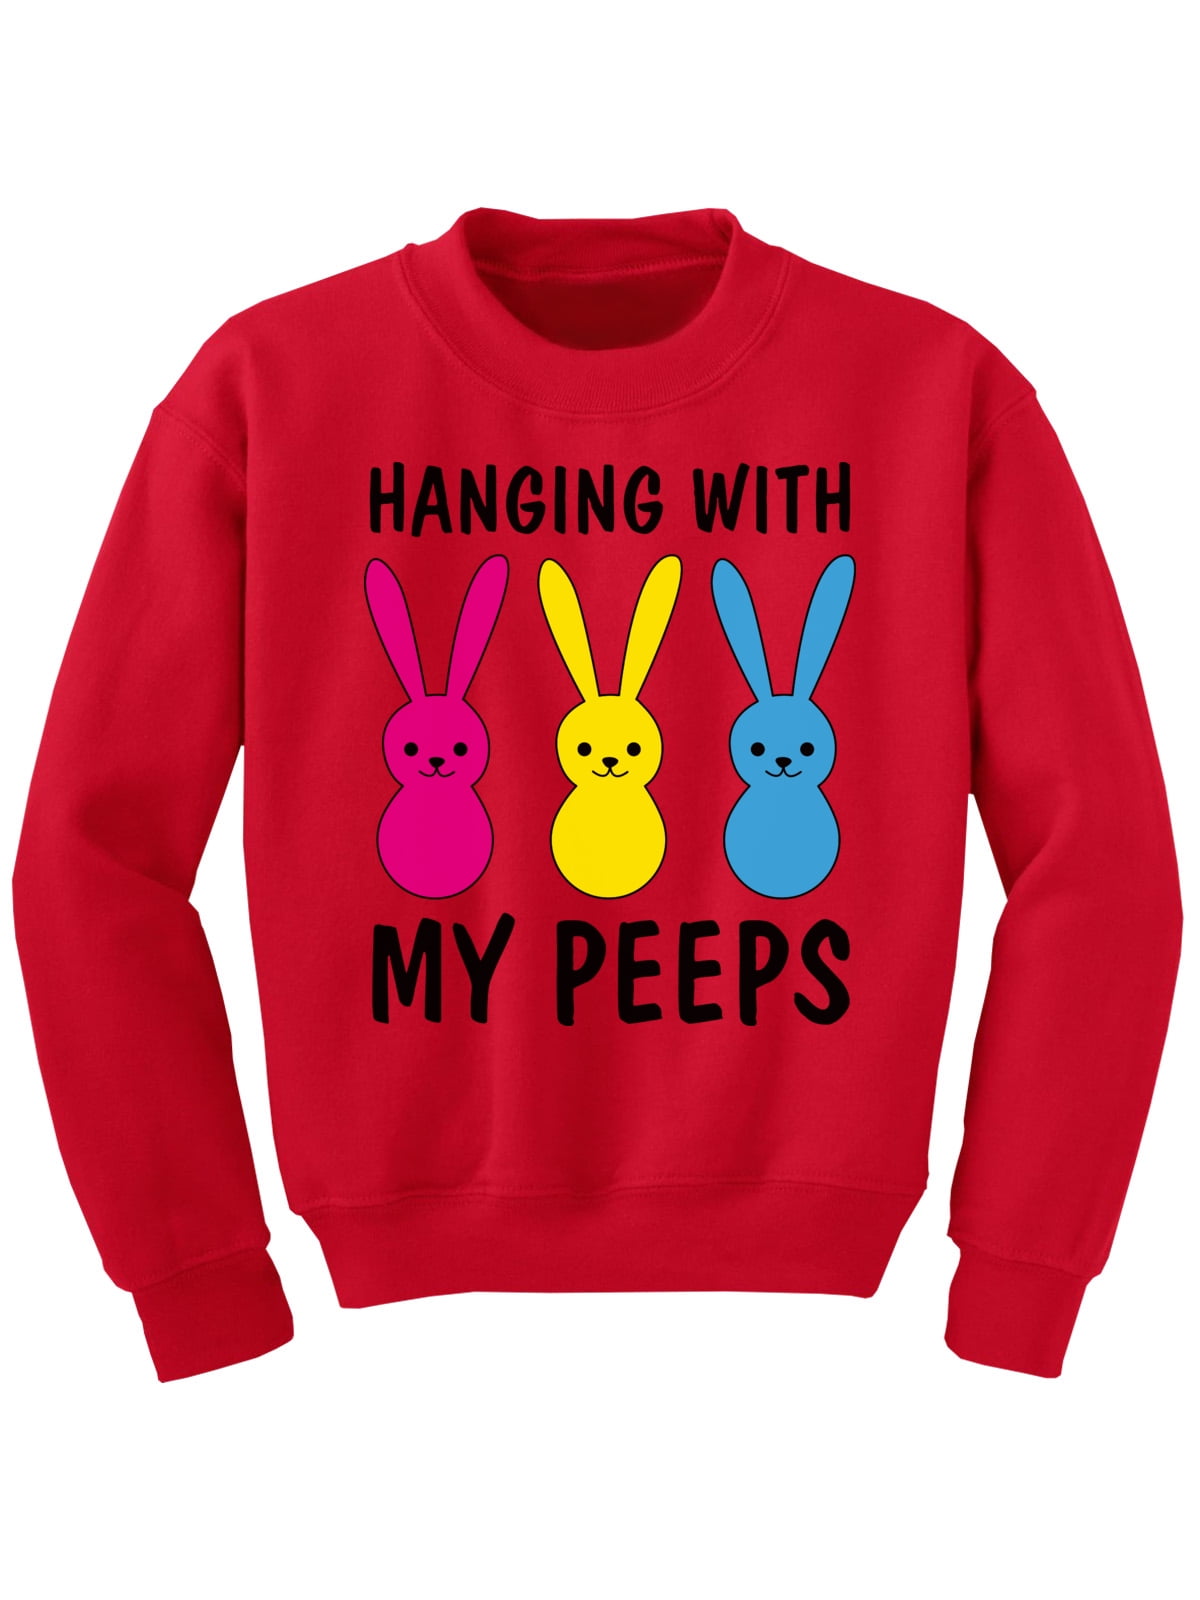 Easter Sweater Girls Boys Teens Age 6-18 Easter Rabbit Graphic Novelty Sweatshirt Hanging with My Peeps - Walmart.com